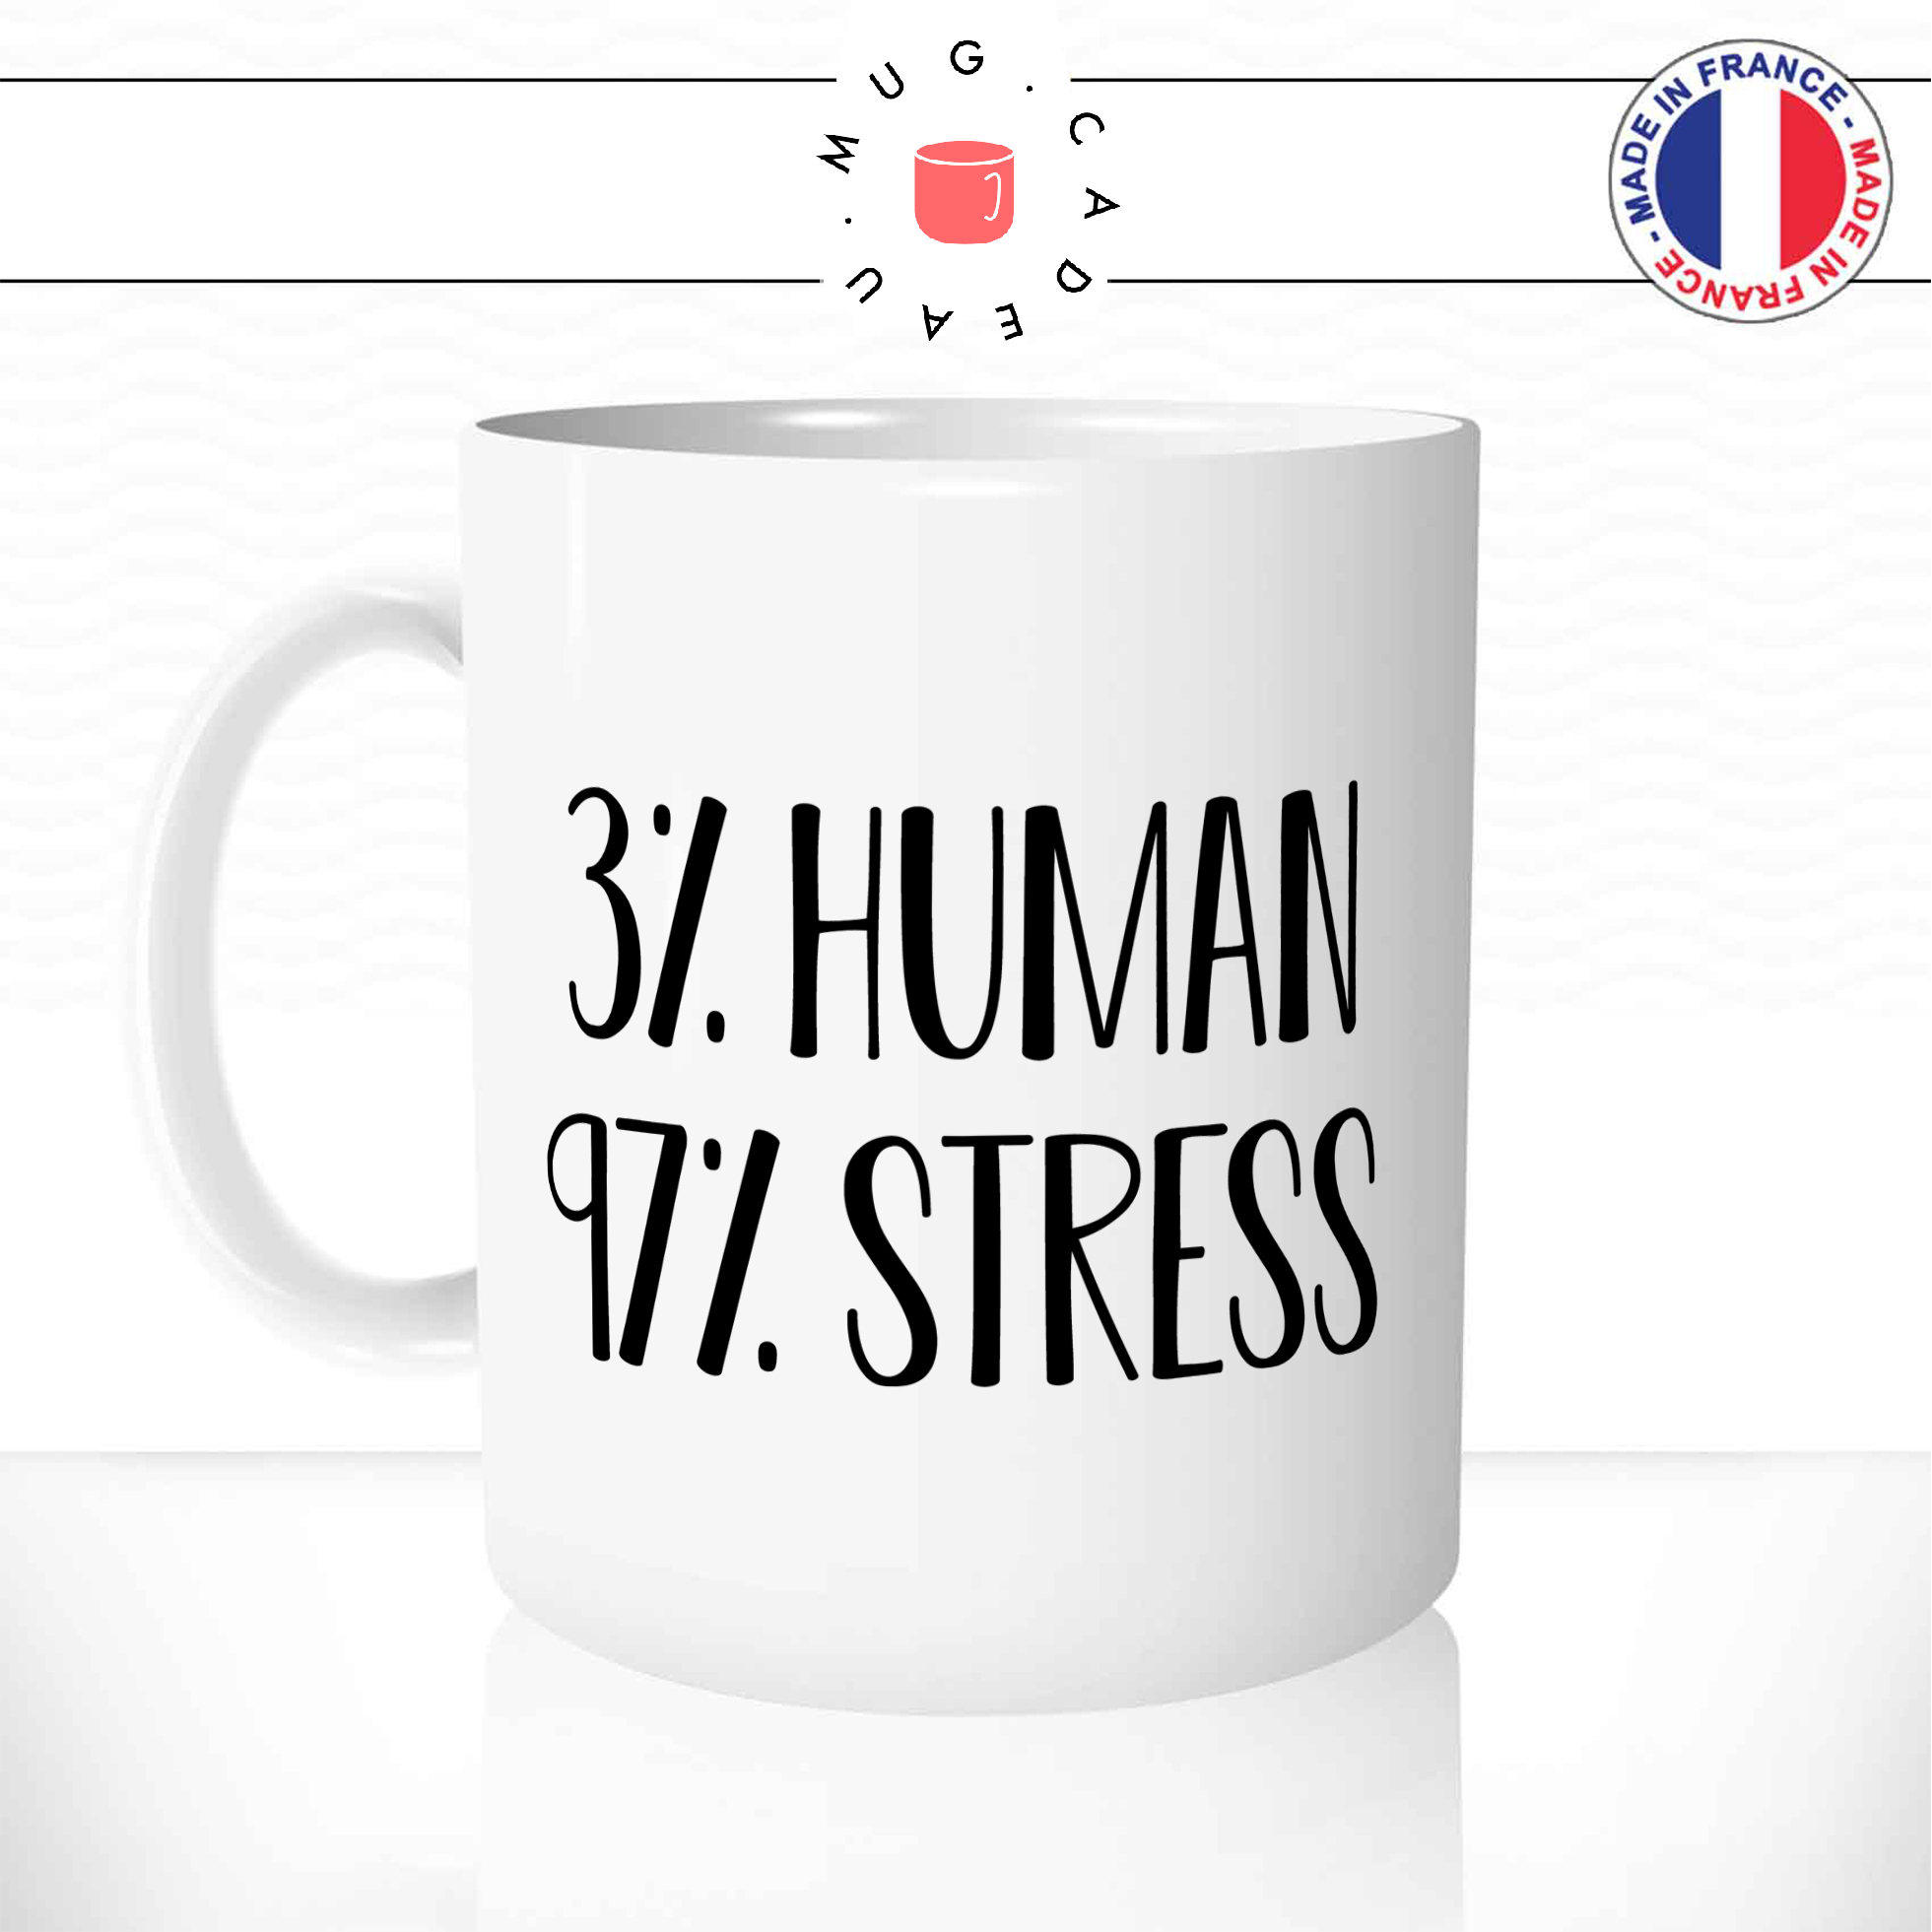 Mug 3% Human 97% Stress